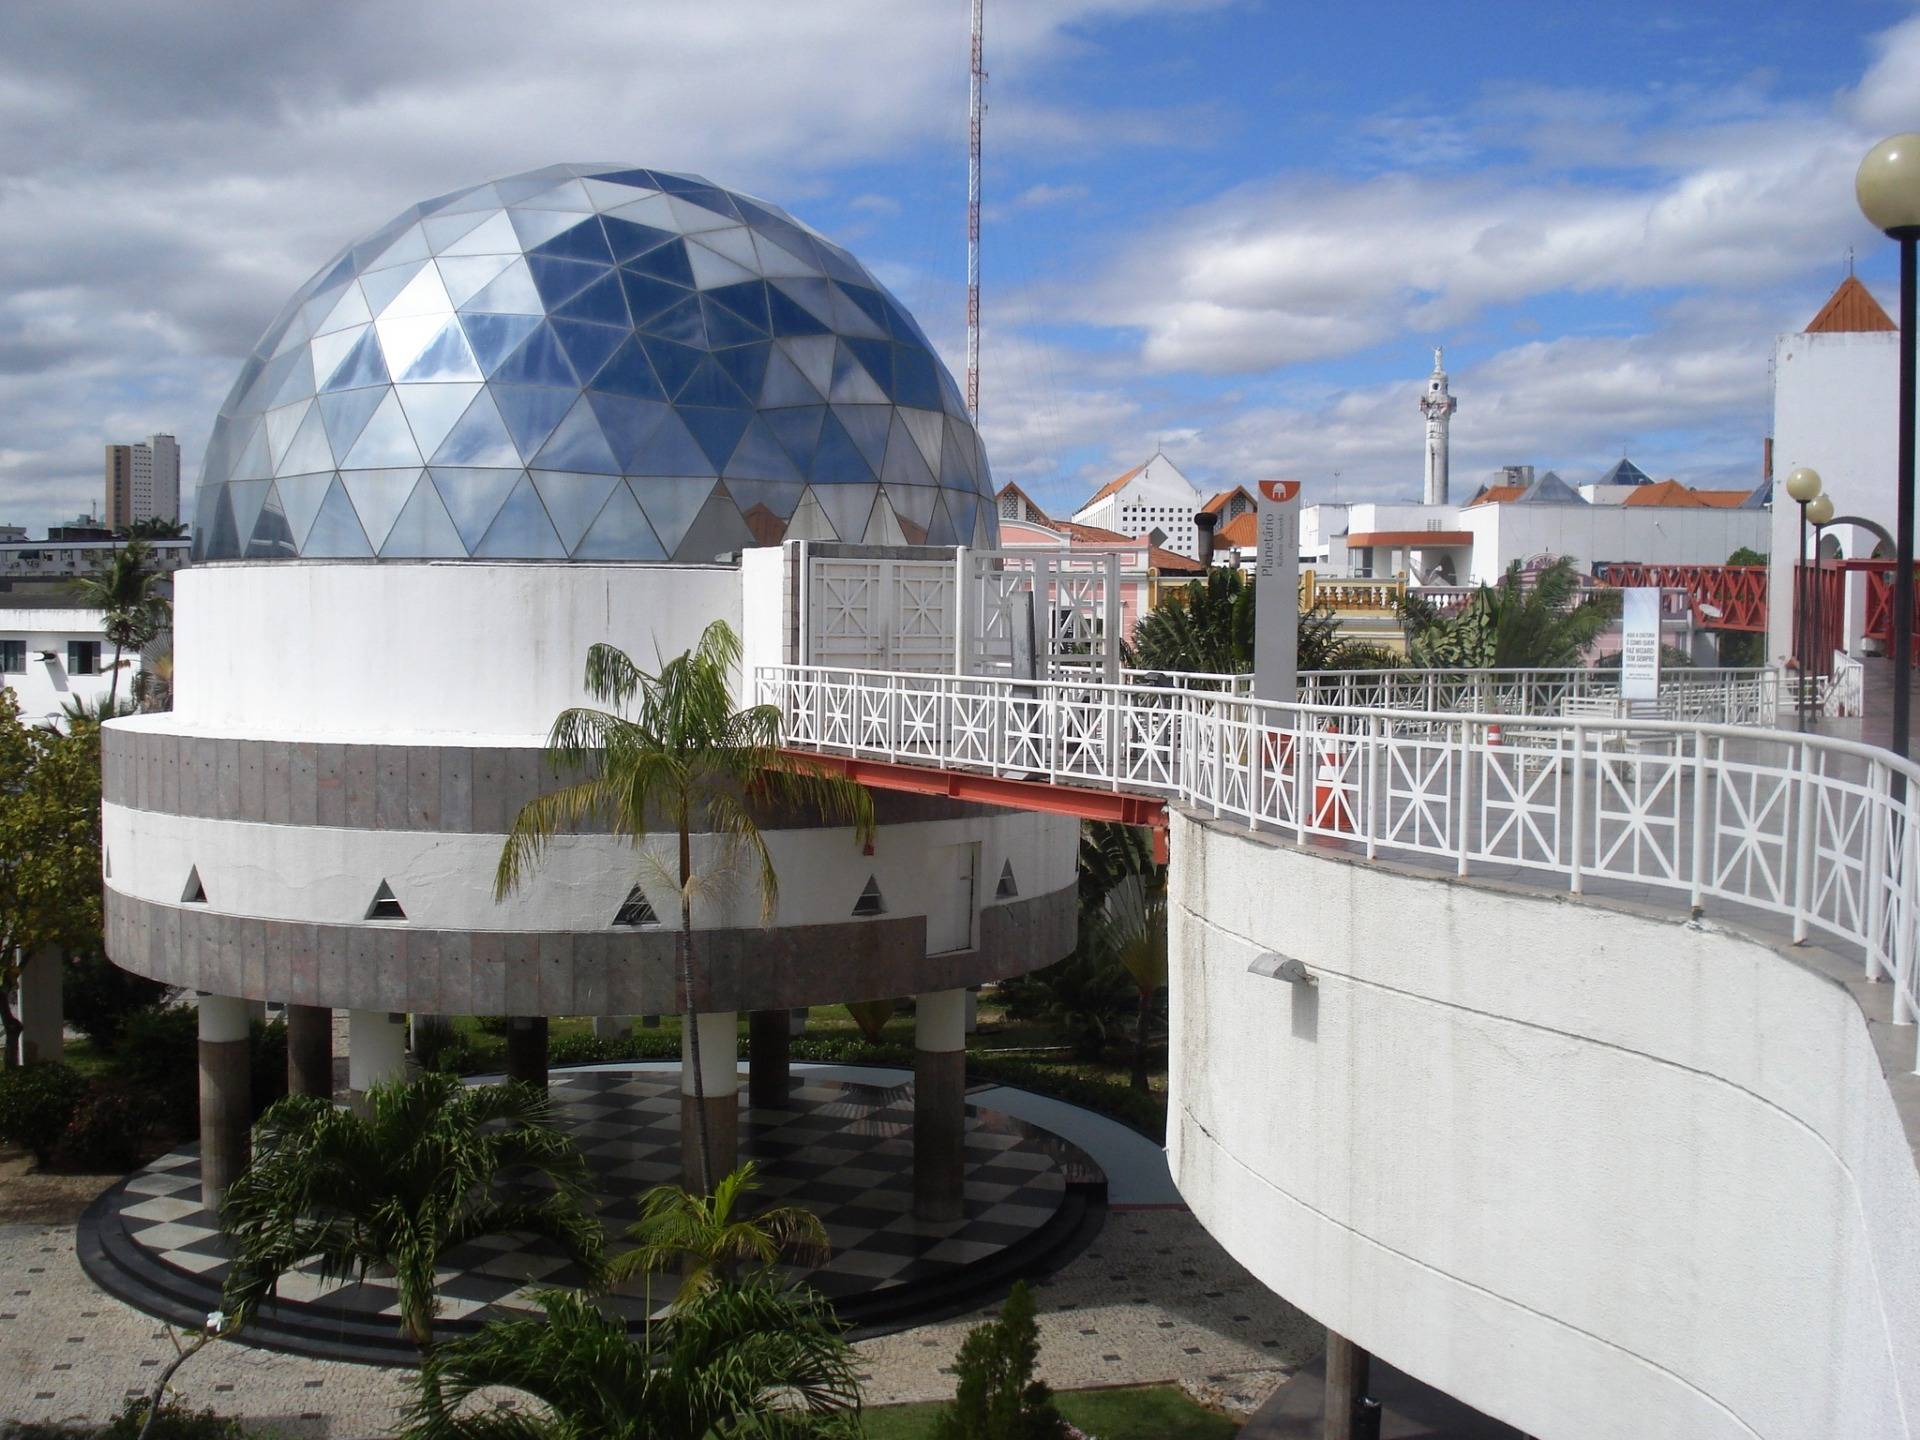 Dragâo do Mar Cultural Center